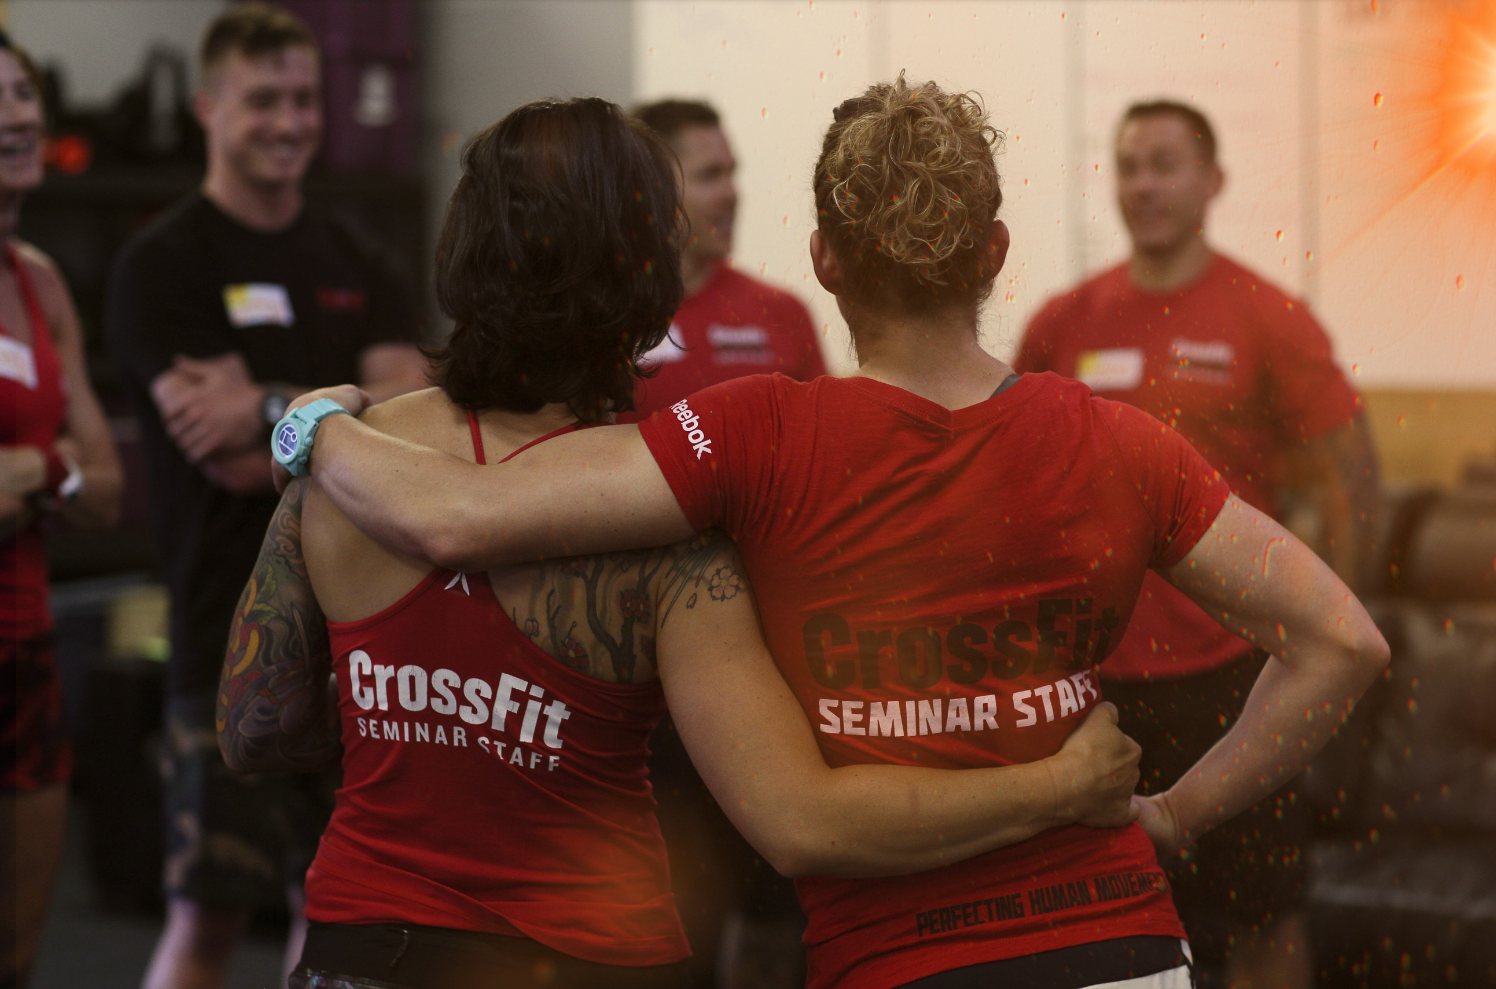 CrossFit Seminar Staff